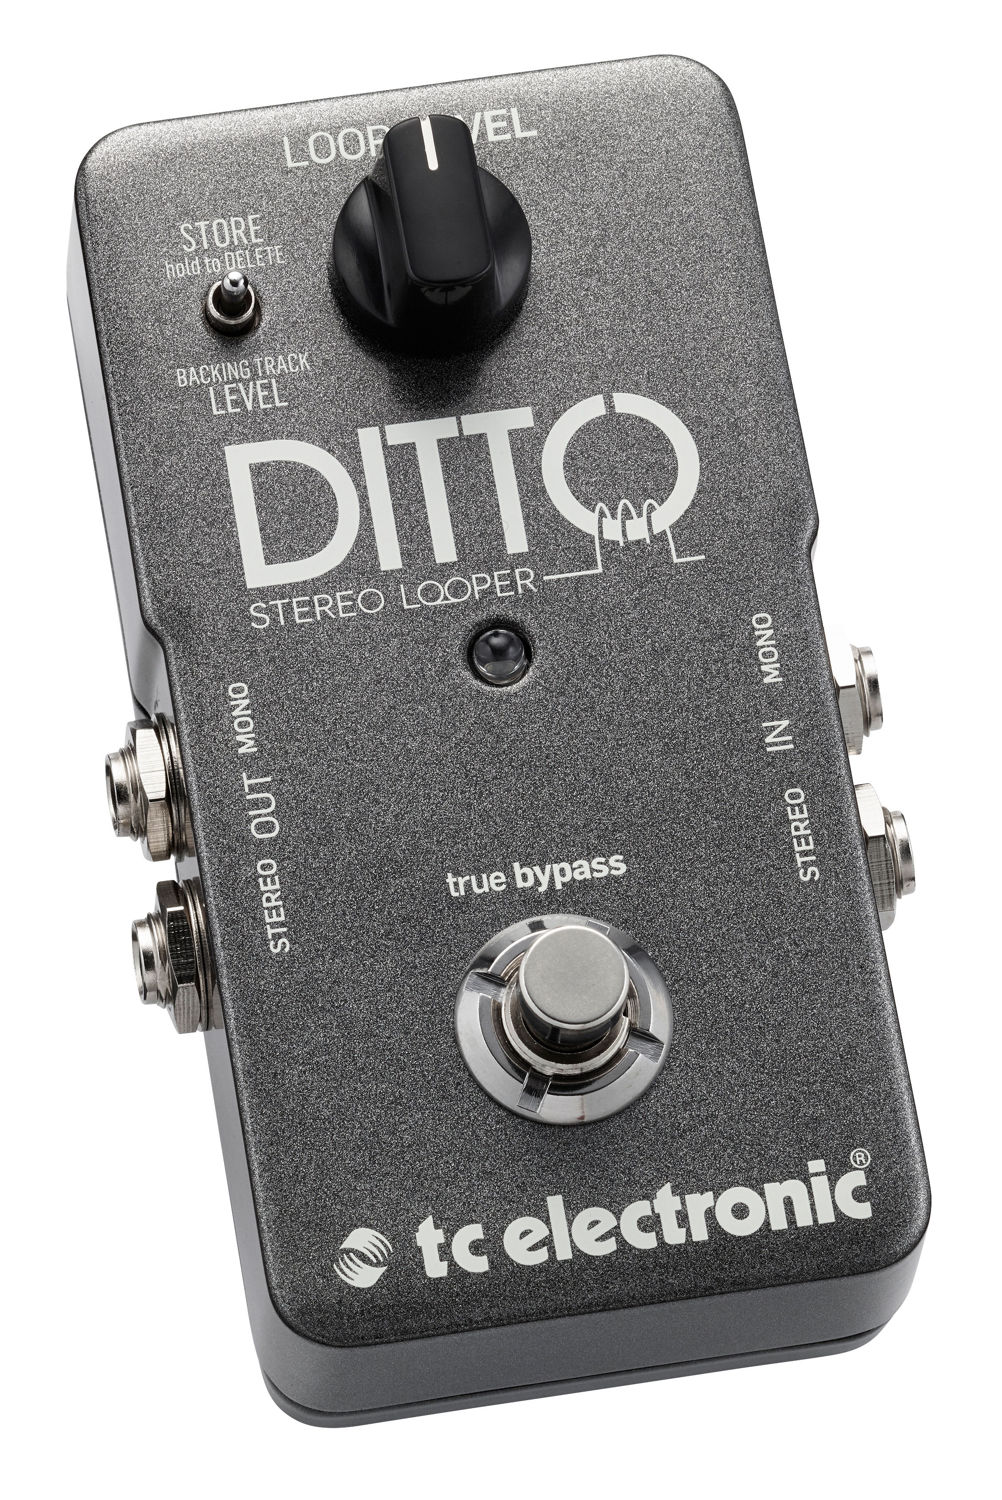 TC ELECTRONIC Ditto stereo ステレオルーパー